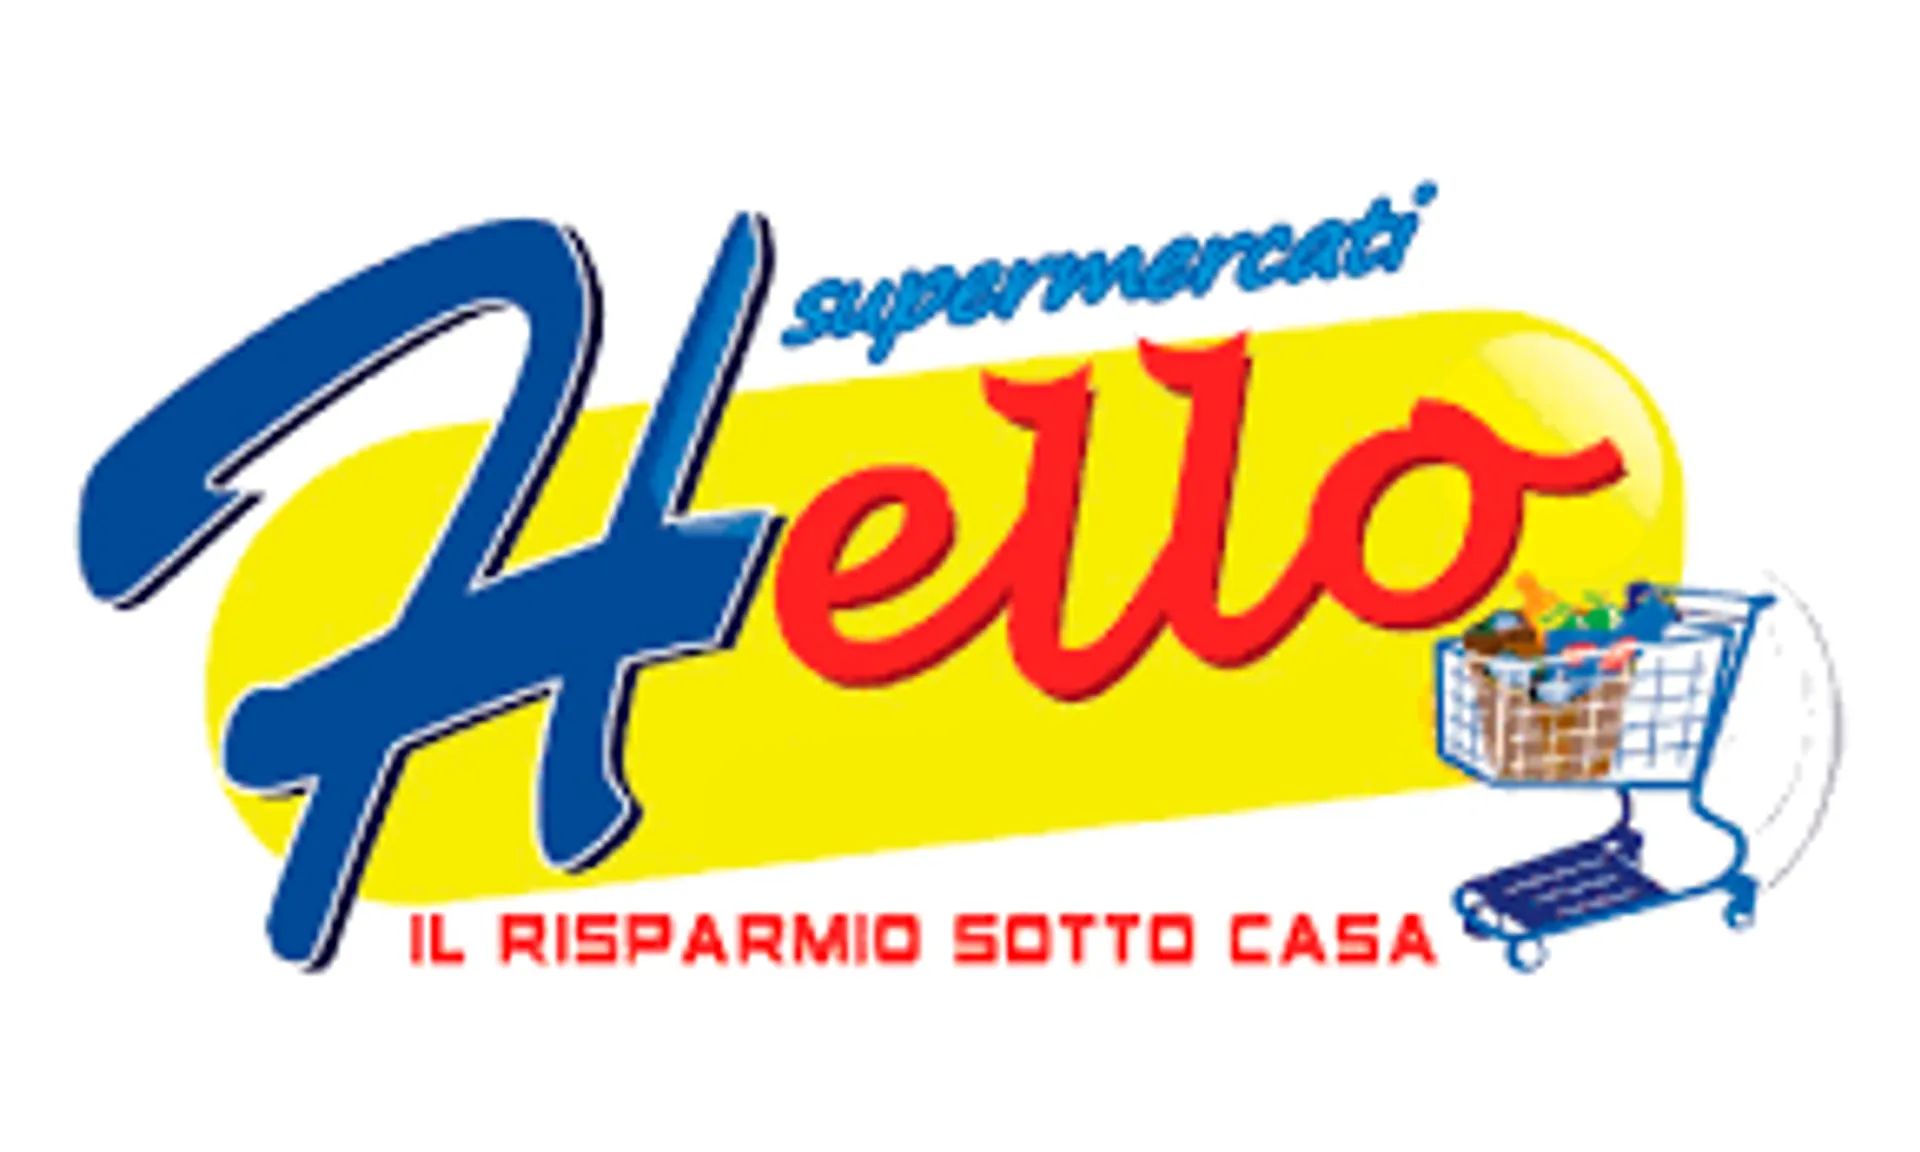 HELLO SUPERMERCATI logo